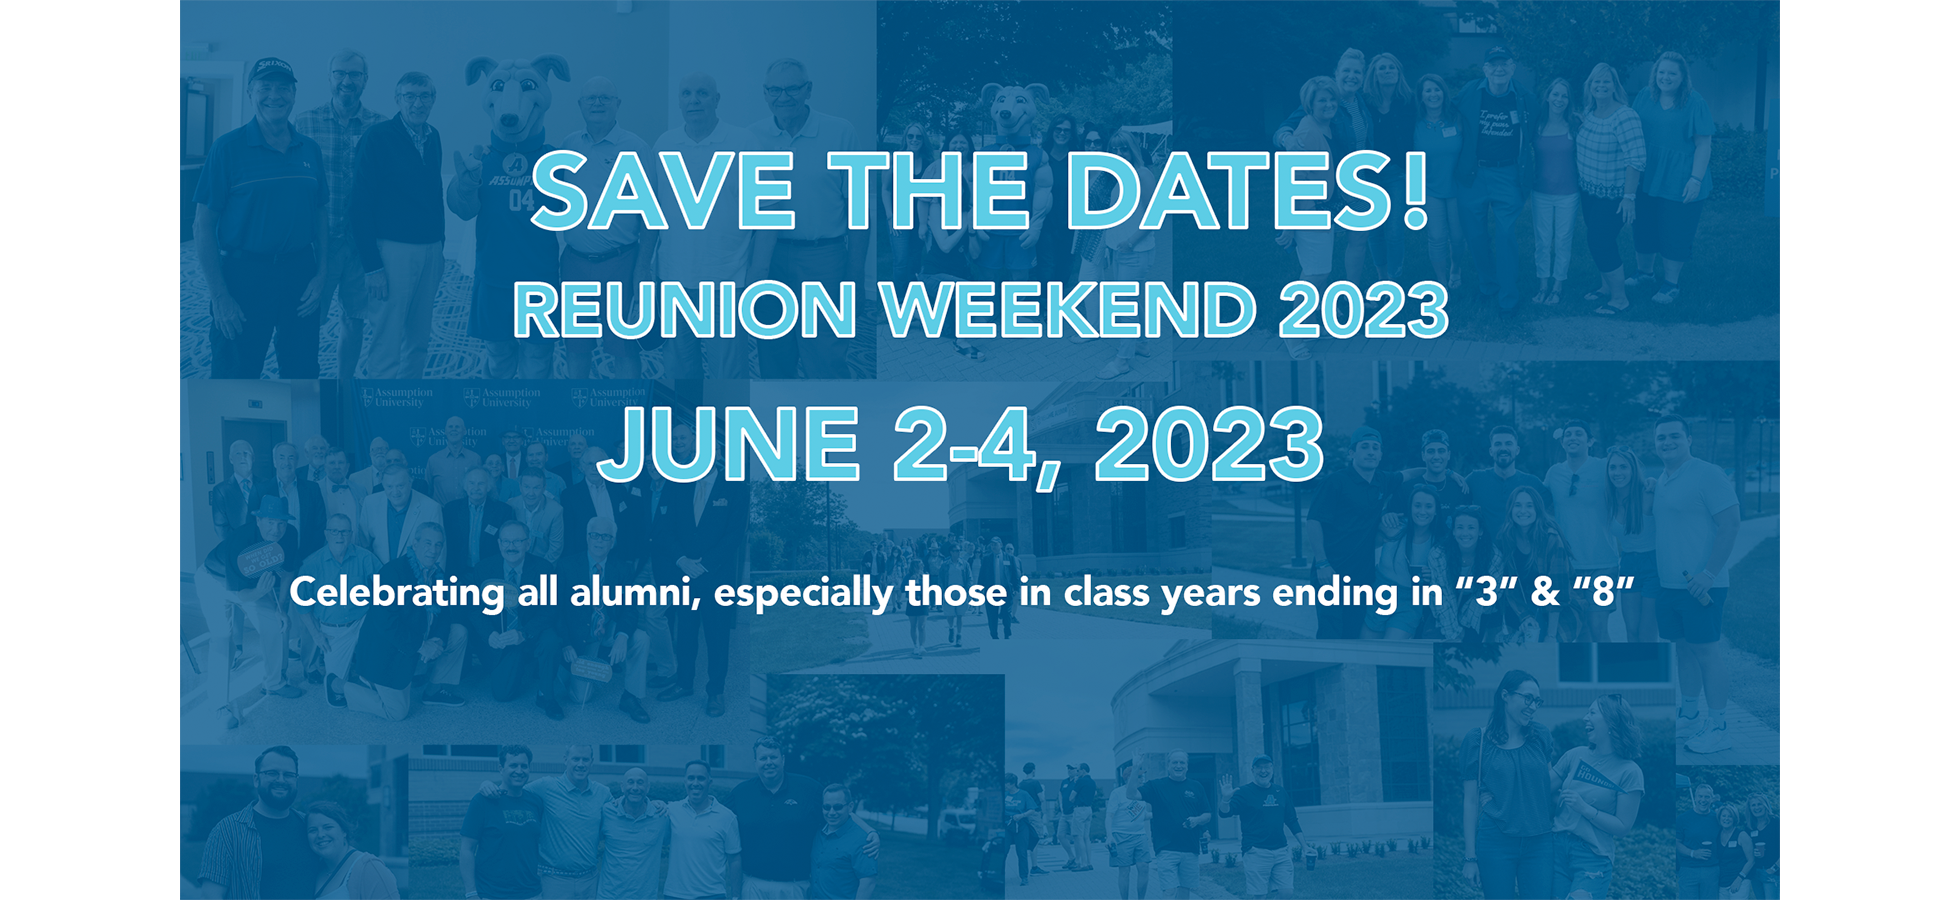 Assumption University will celebrate Alumni Reunion on the weekend of June 2-4, 2023